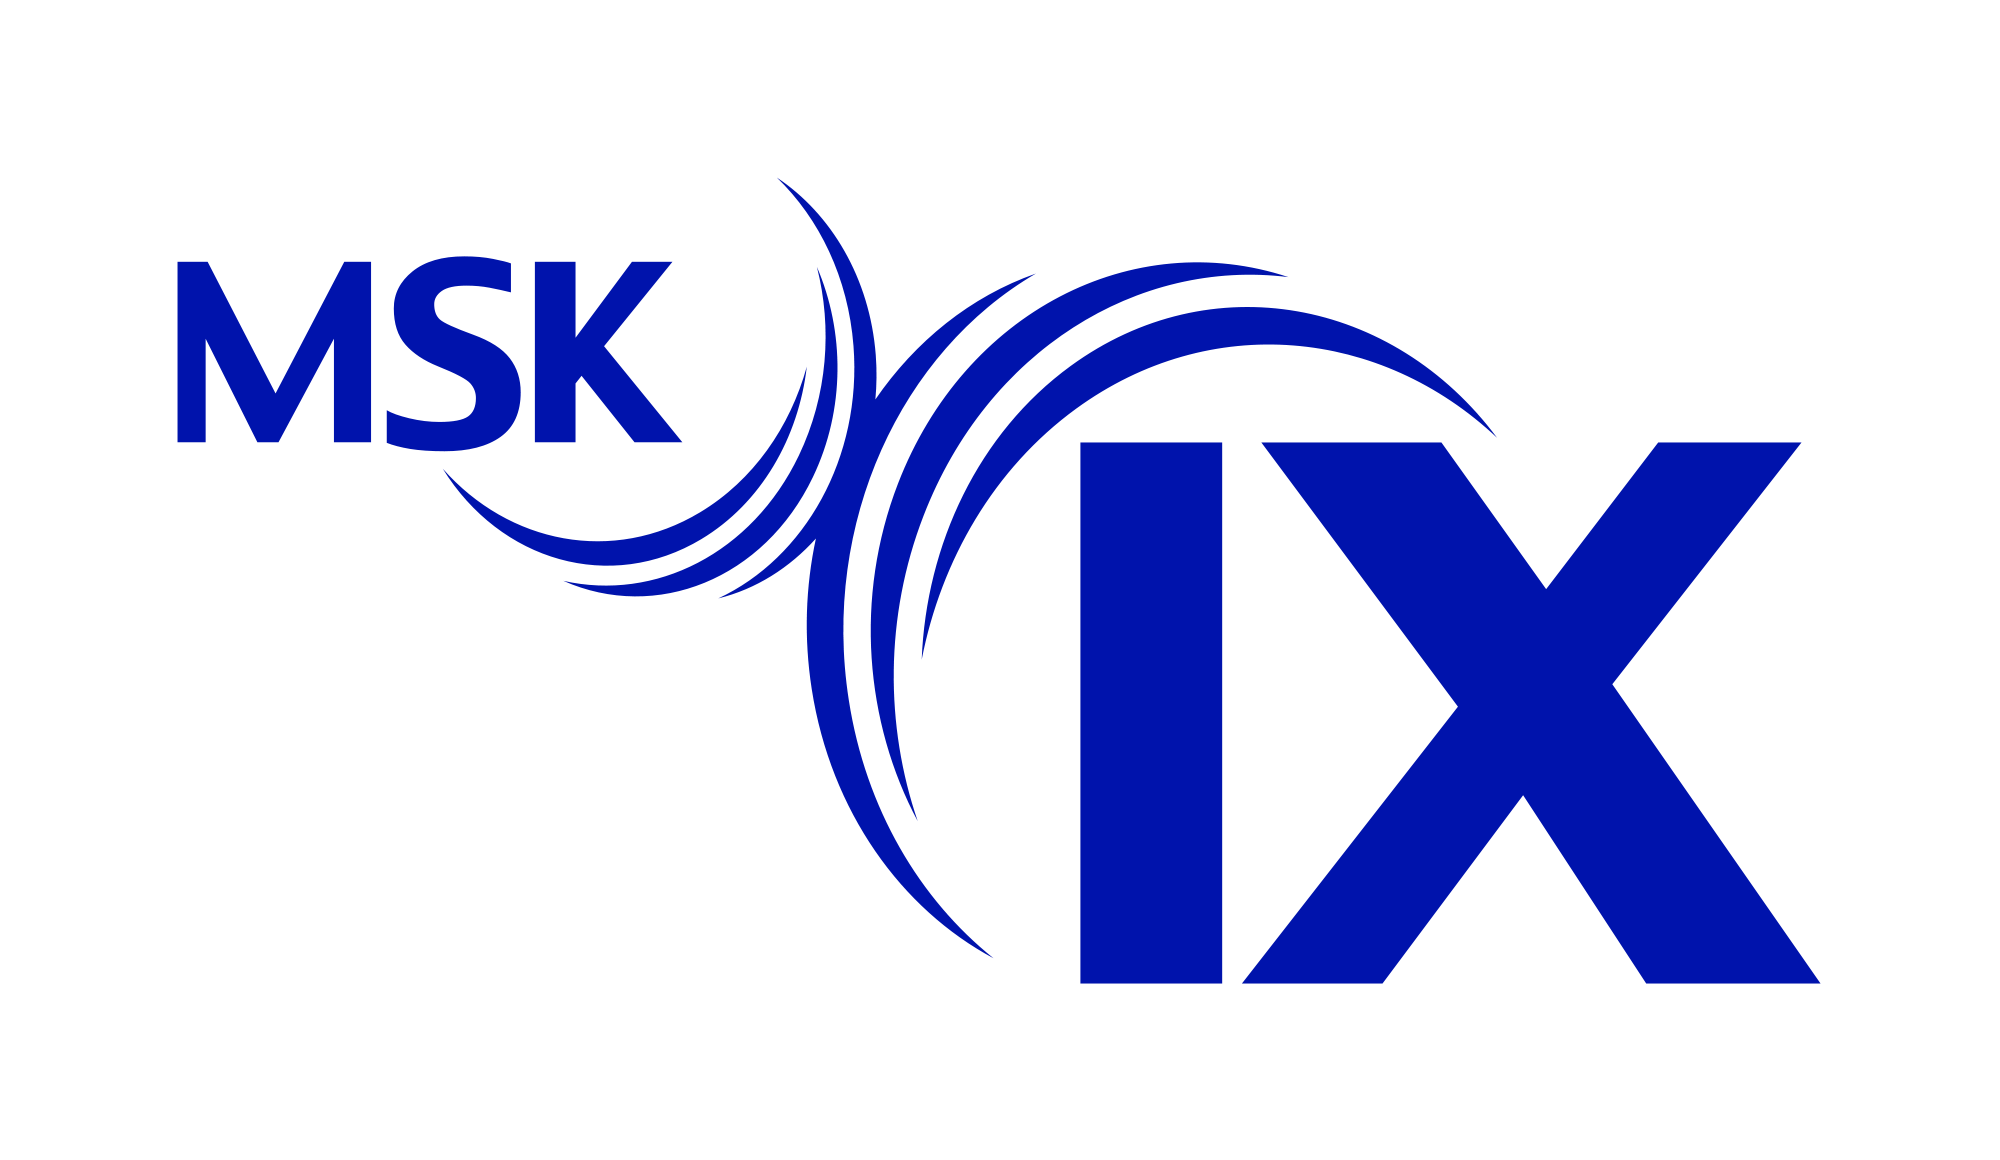 IX Logo - File:MSK-IX-logo.svg - Wikimedia Commons